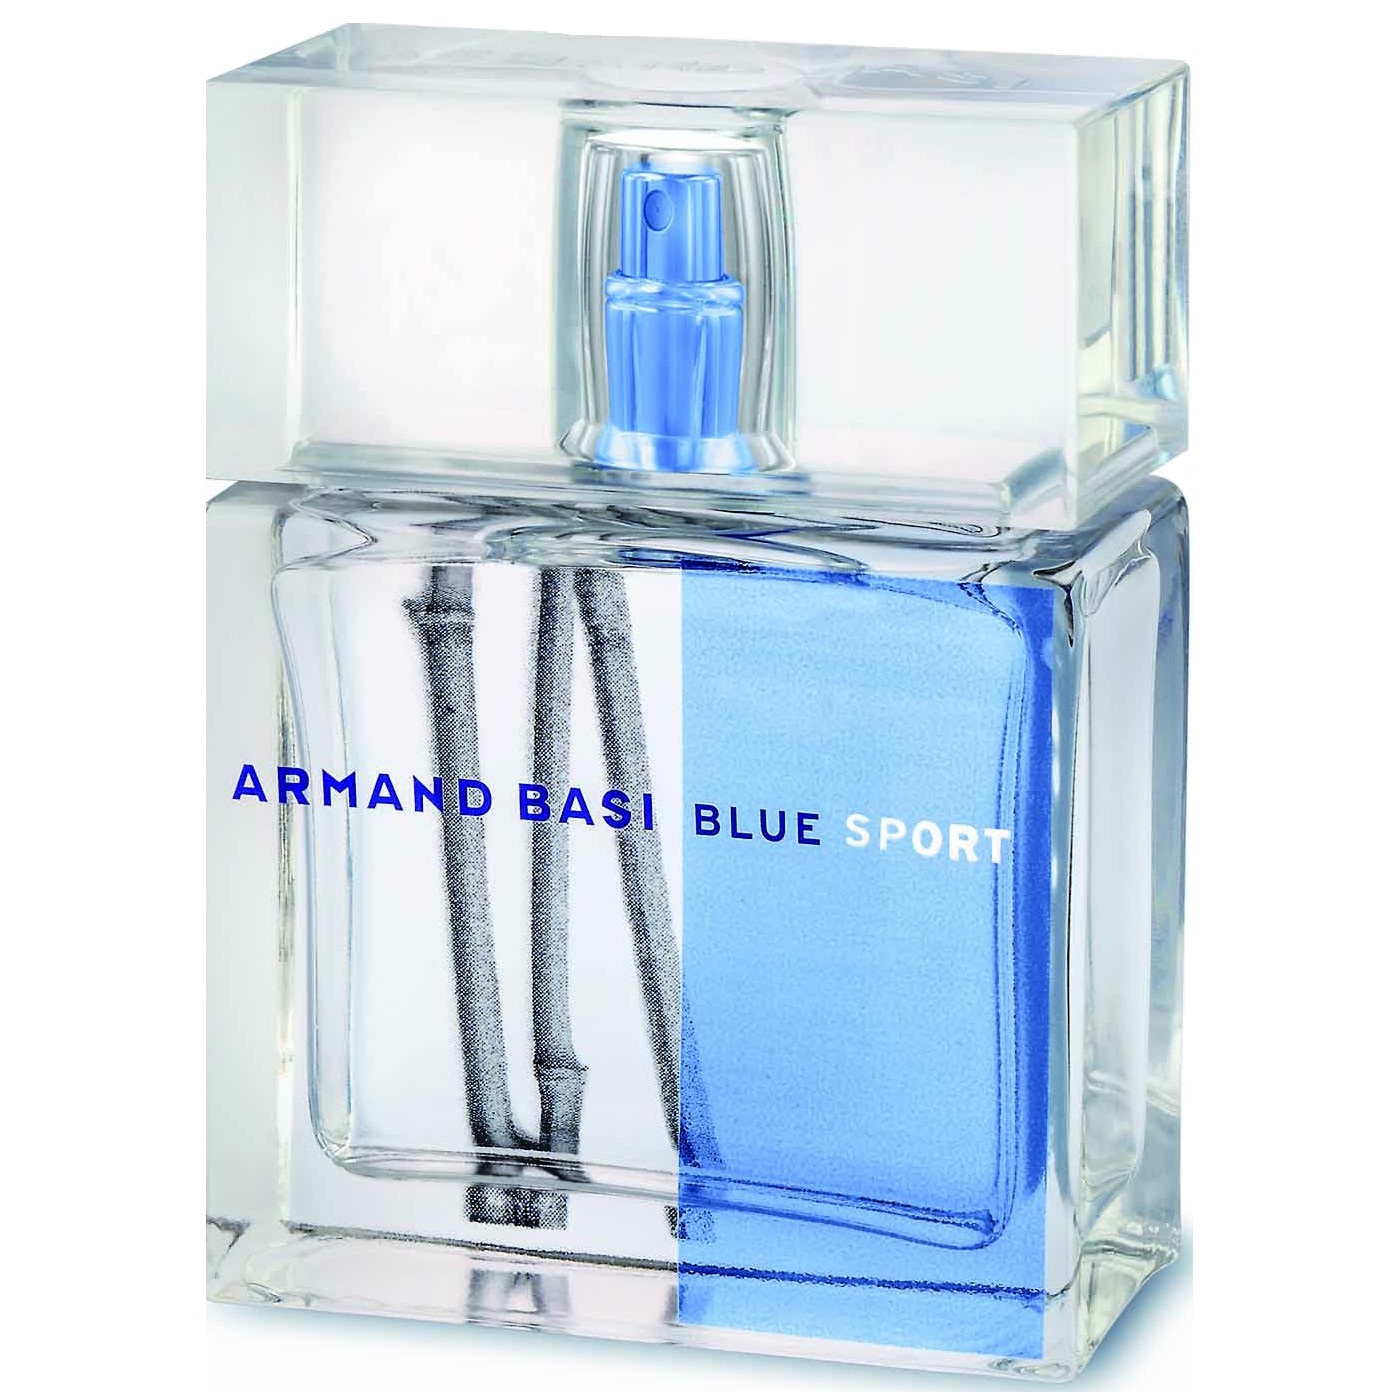 Armand blue sport. Armand basi Blue Sport 100 ml. Armand basi Blue Sport 50. Armand basi Blue Sport 50 ml. Armand basi in Blue (Armand basi) 100мл.